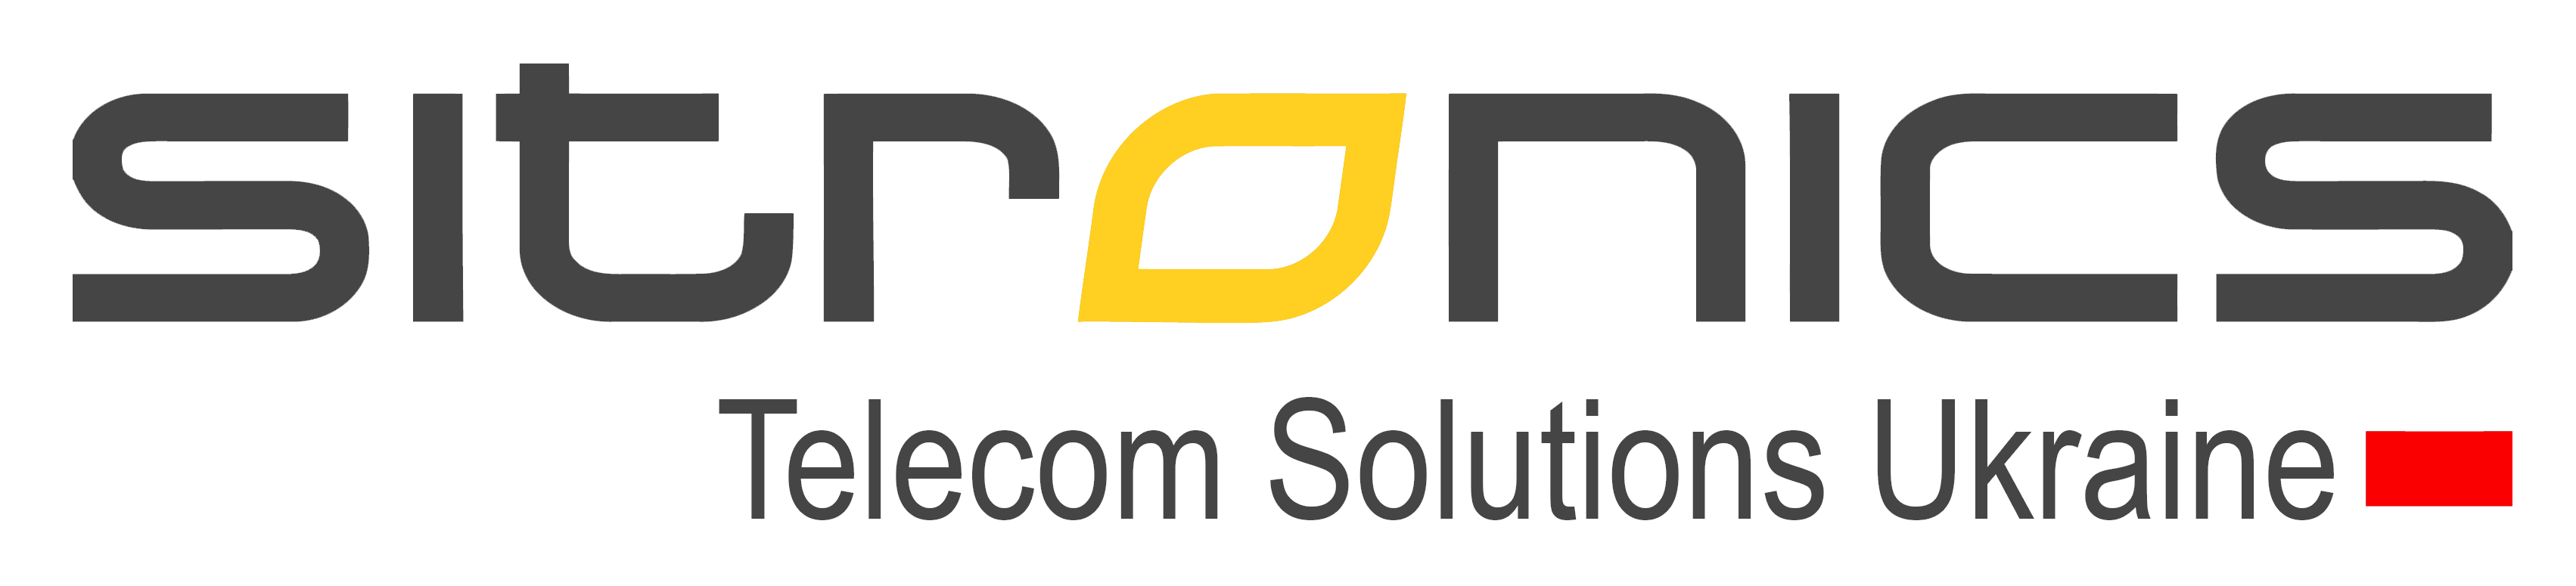 Sitronics Telecom Solutions Ukraine logo